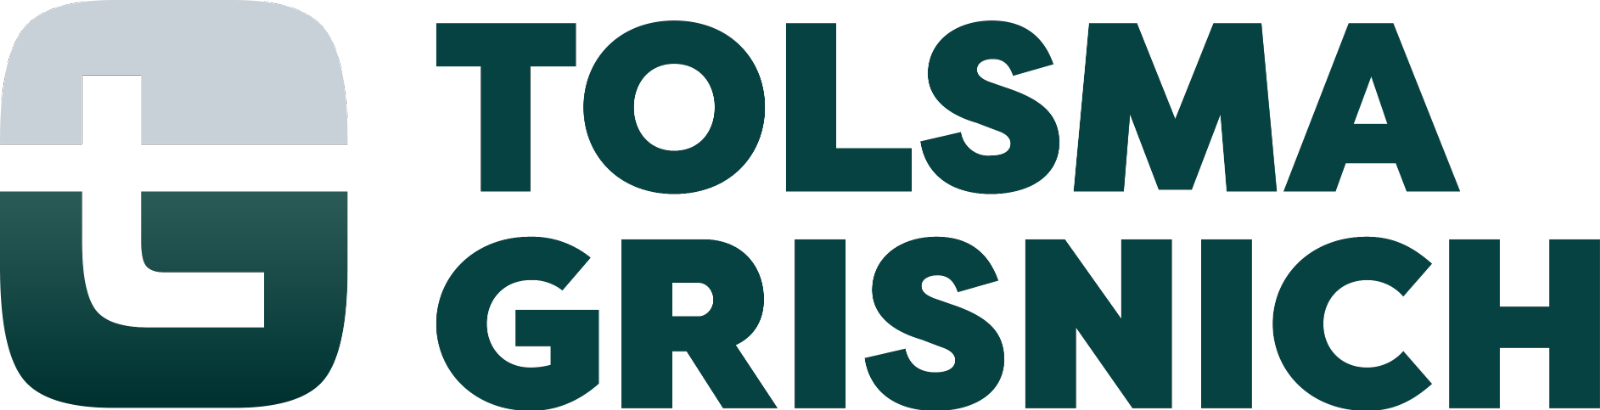 Tolsma Grisnich logo